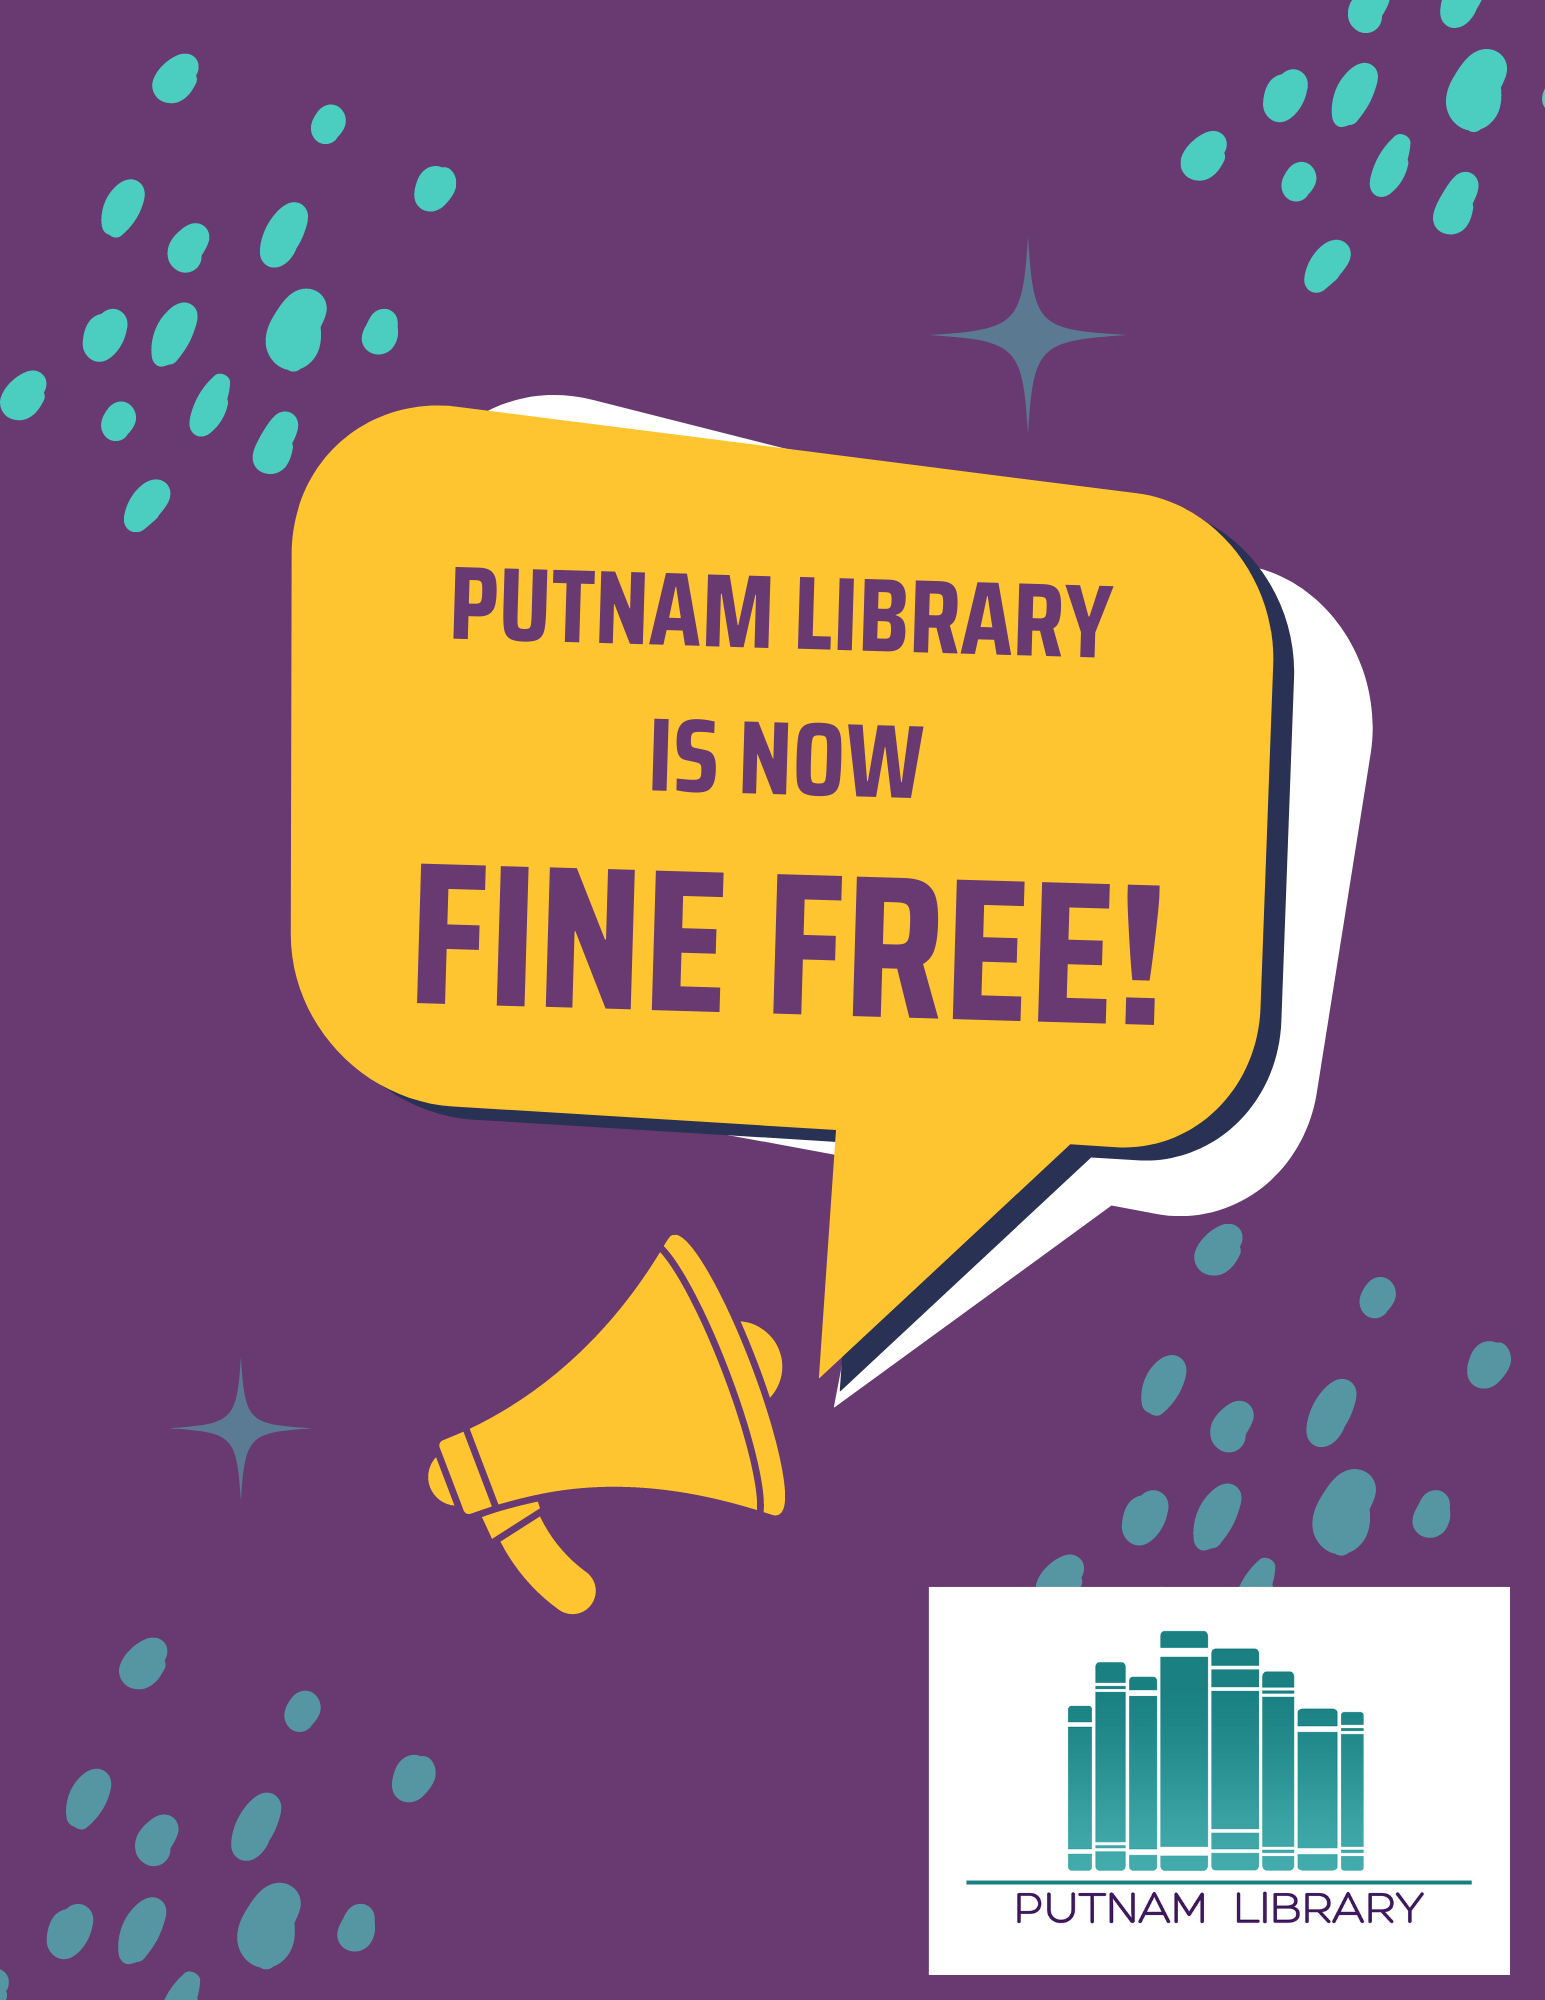 Putnam Library is Fine Free